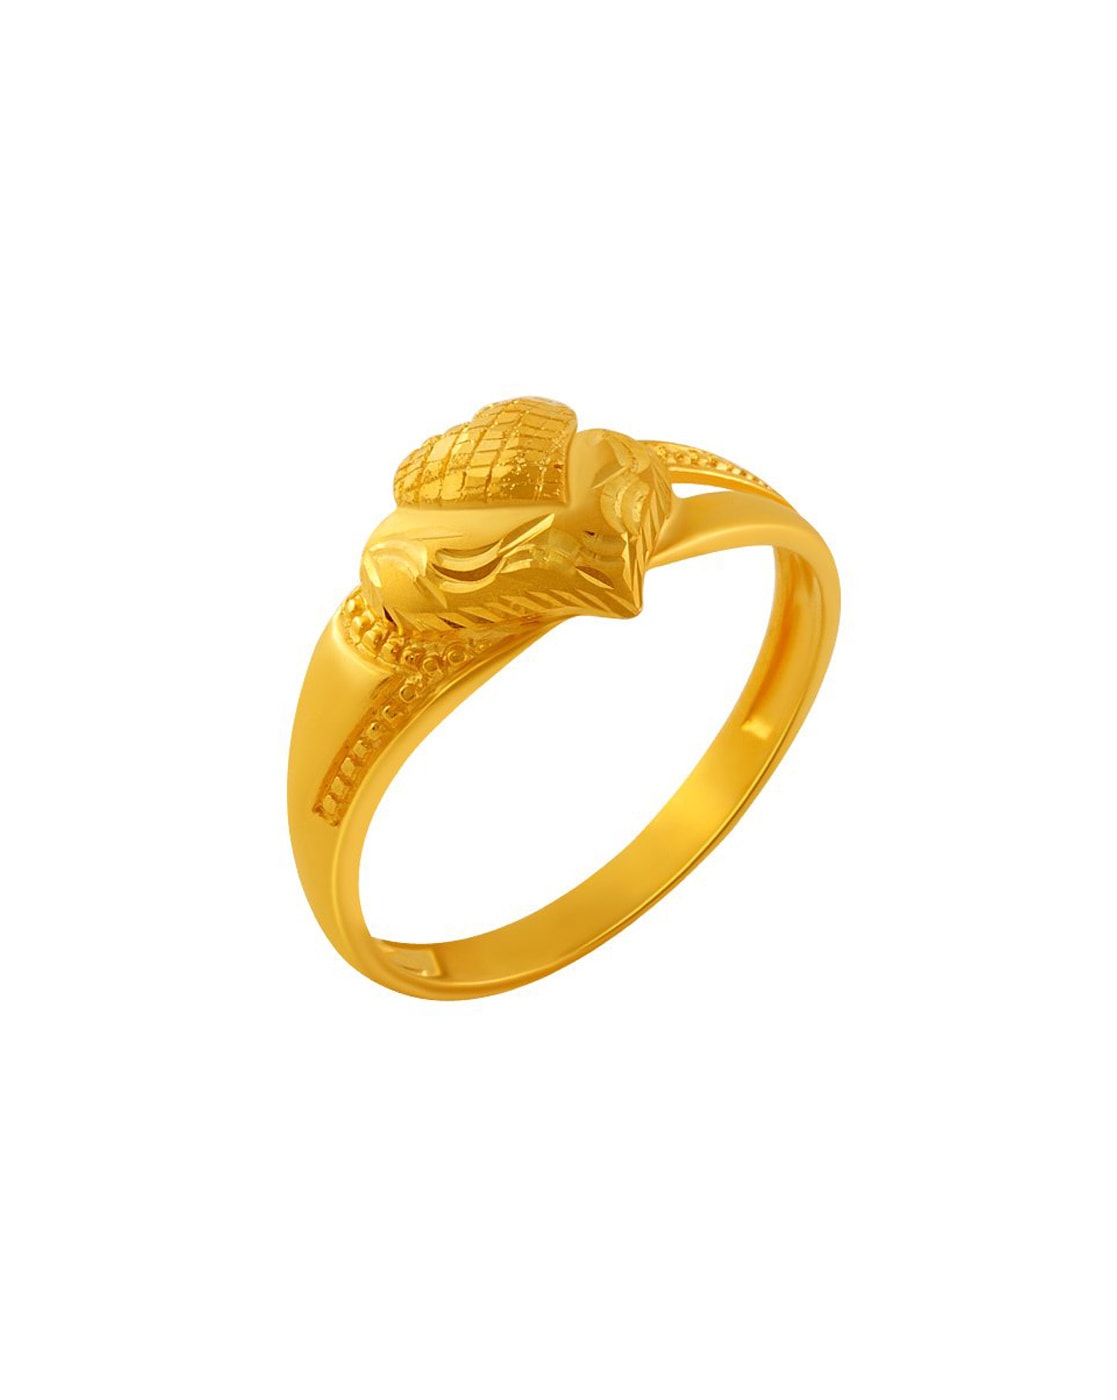 Red Blue Evil Eye Ring for Women Men Fashion Love Heart Rhinestone Finger  Ring Opening Adjustable Lucky Jewelry Friendship Gift - AliExpress